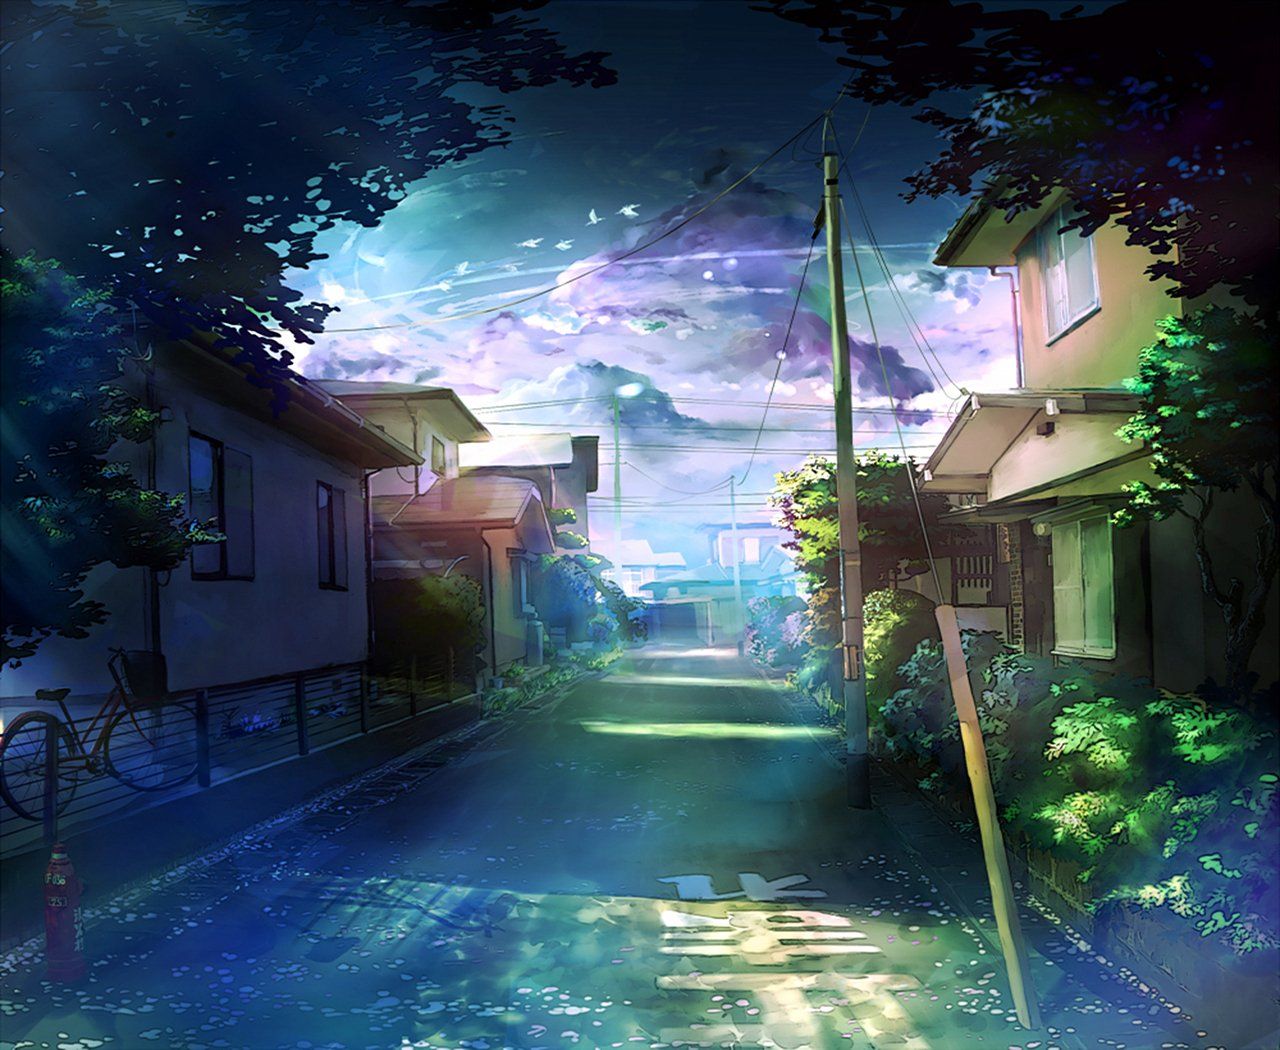 Studio Ghibli Wallpaper Tokyo street  warm summer night   rStableDiffusion